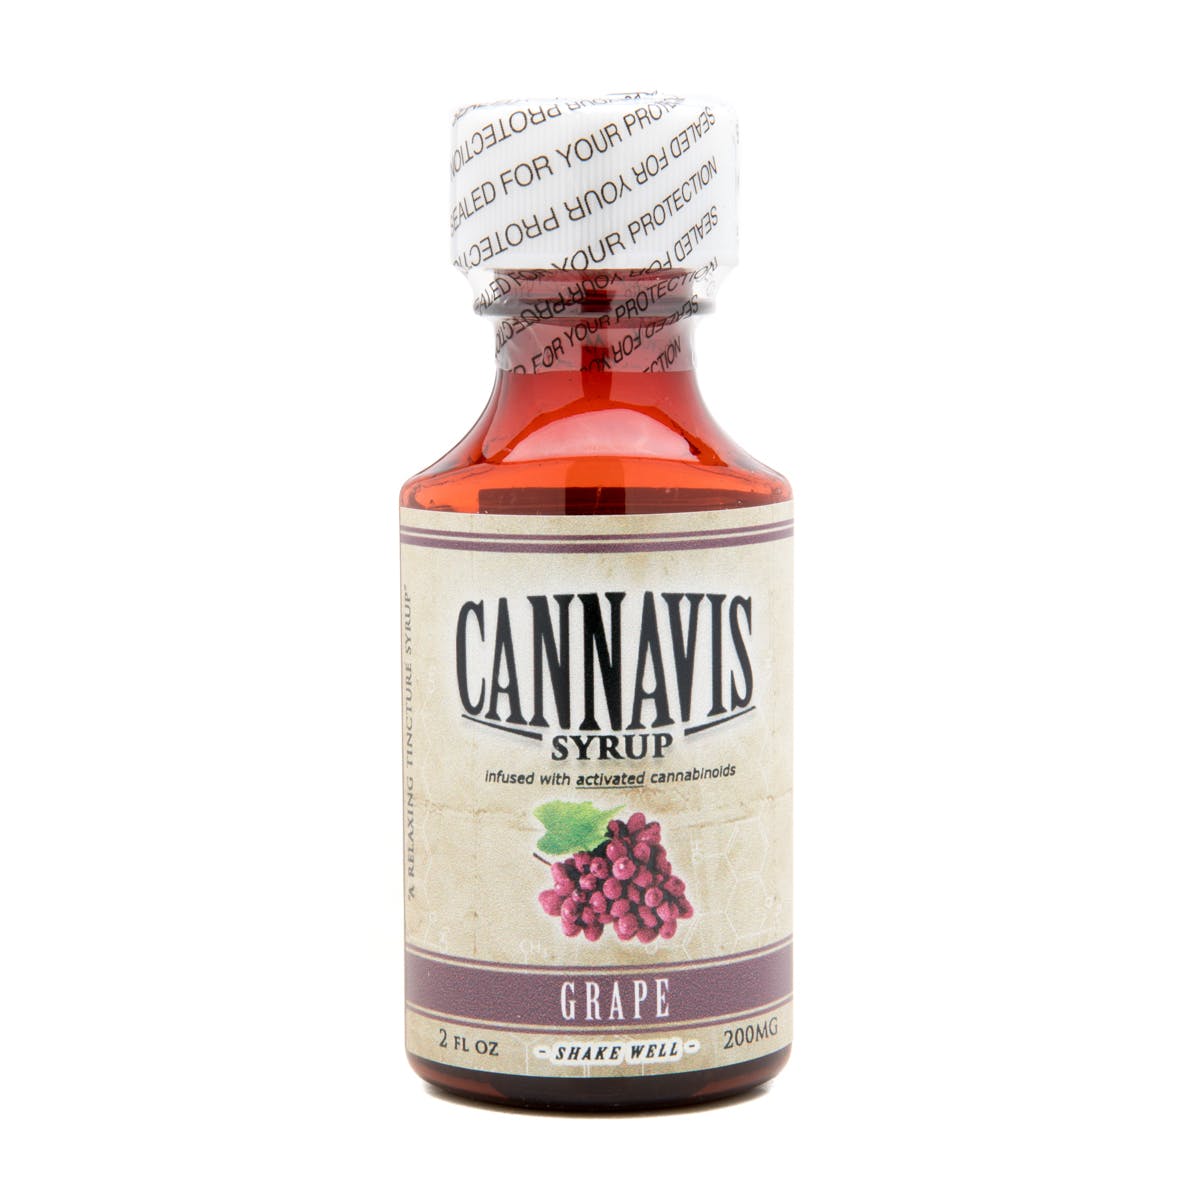 marijuana-dispensaries-organic-solutions-whittier-in-whittier-cannavis-syrup-2c-grape-200mg